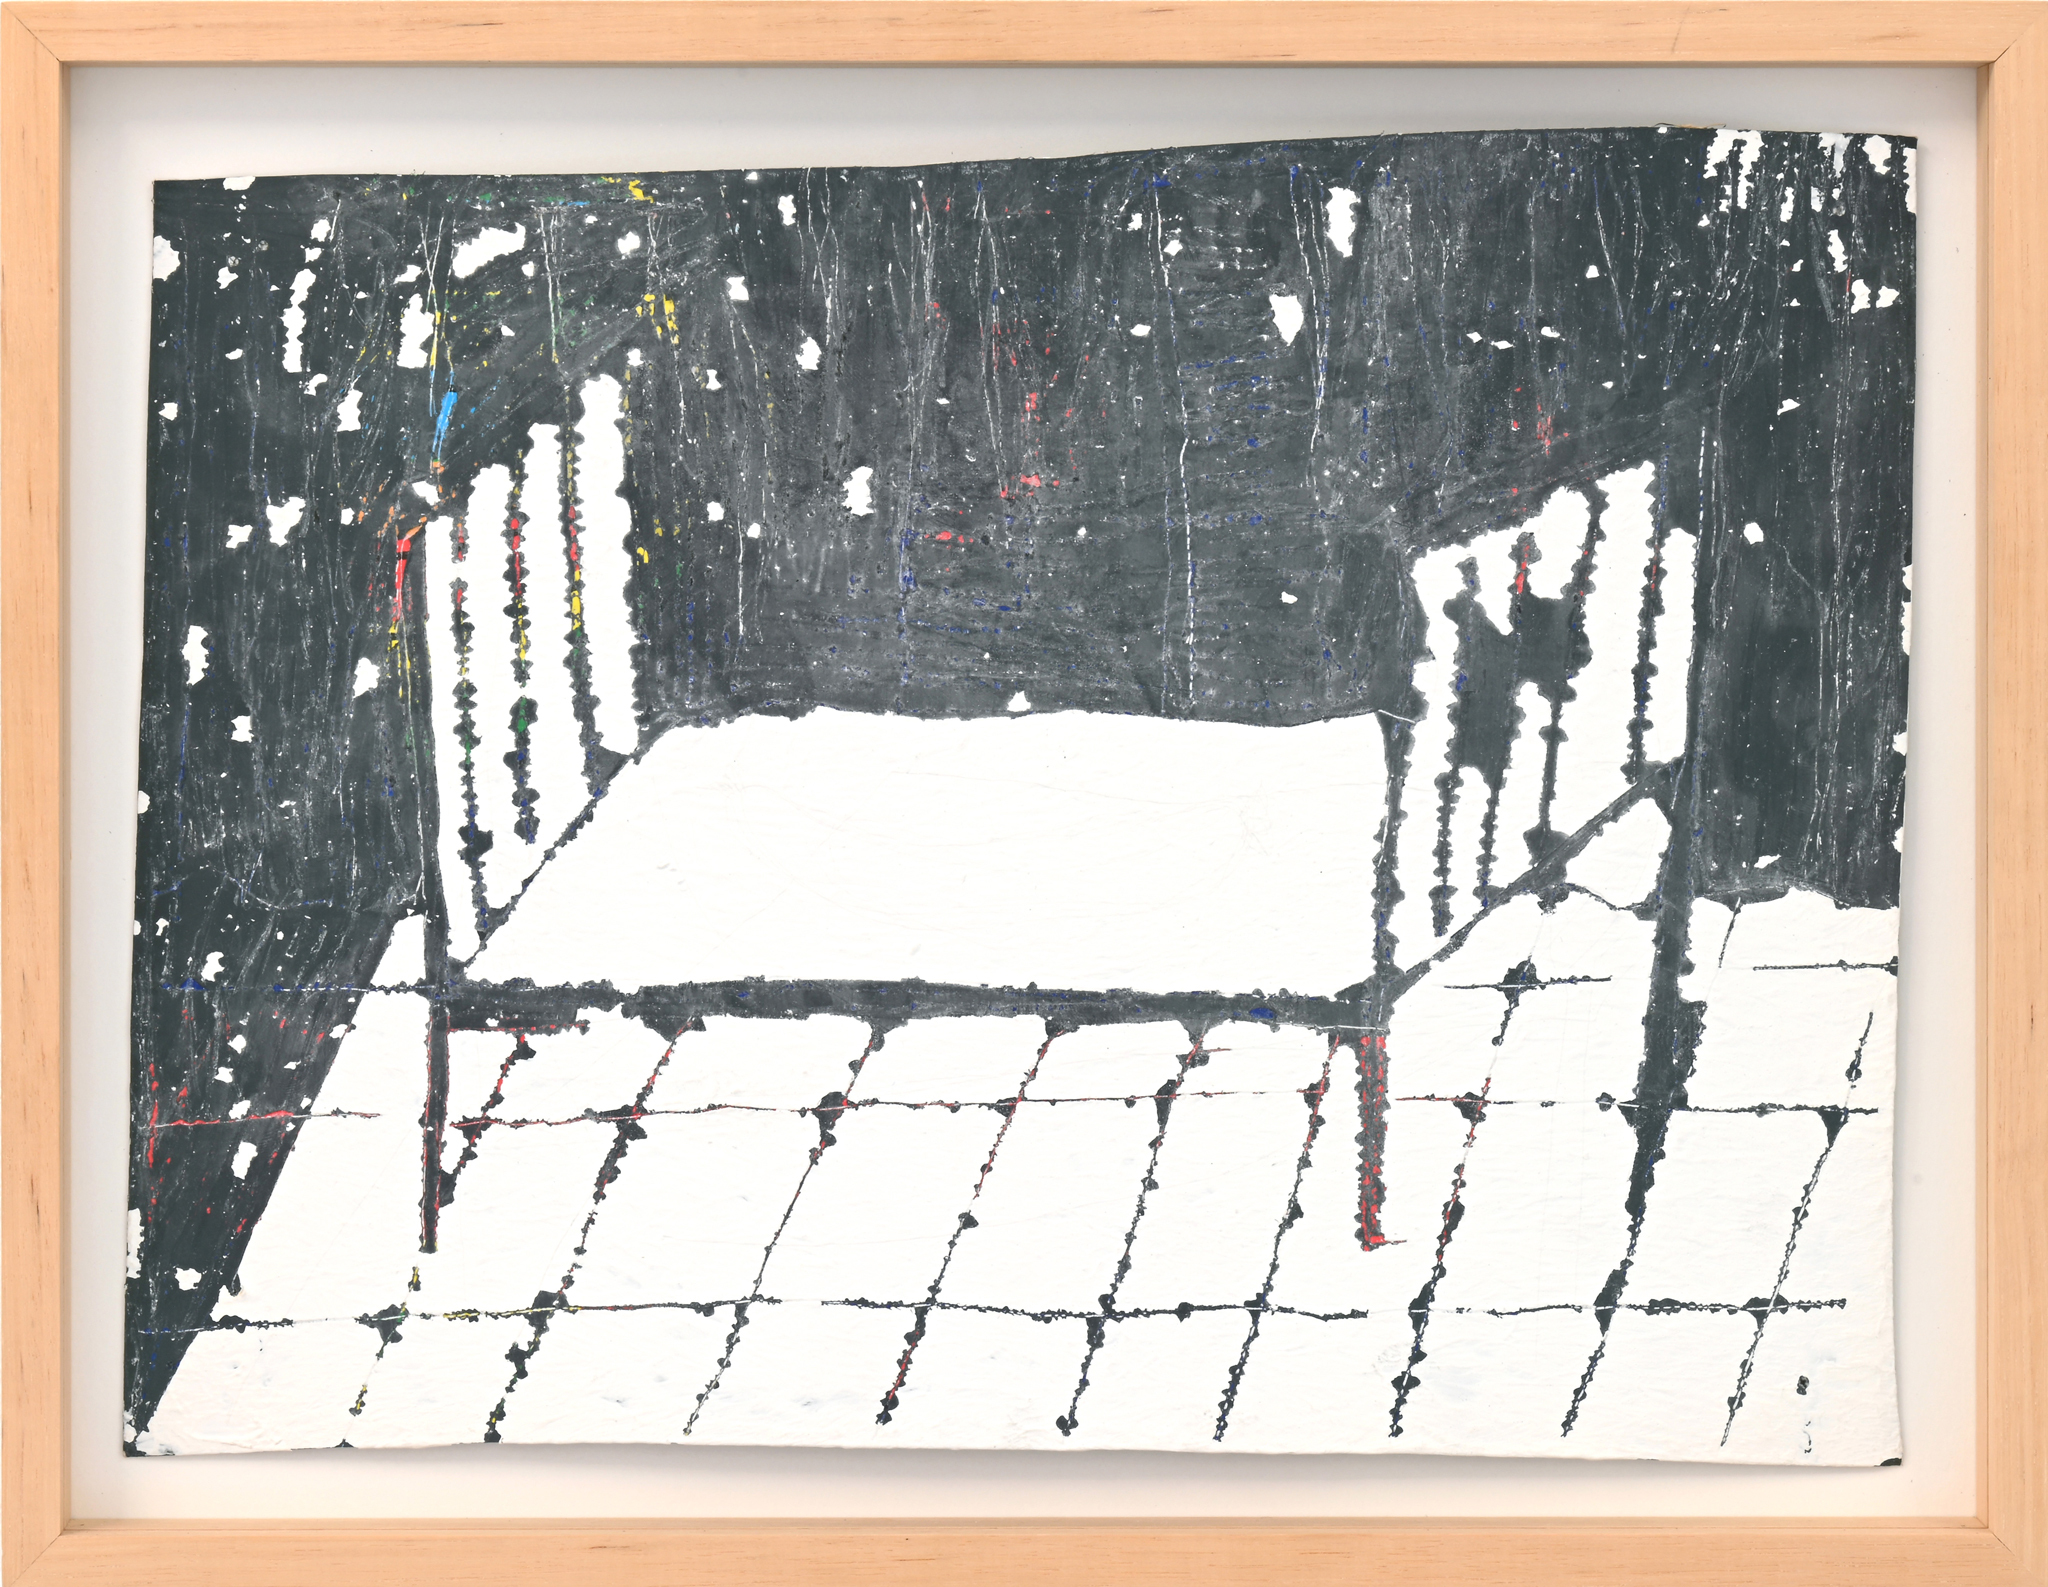 Bett (1/3), 2020, latex on tetra pack, motif: ca. 22x32 cm / frame: 27,5x36,5 cm